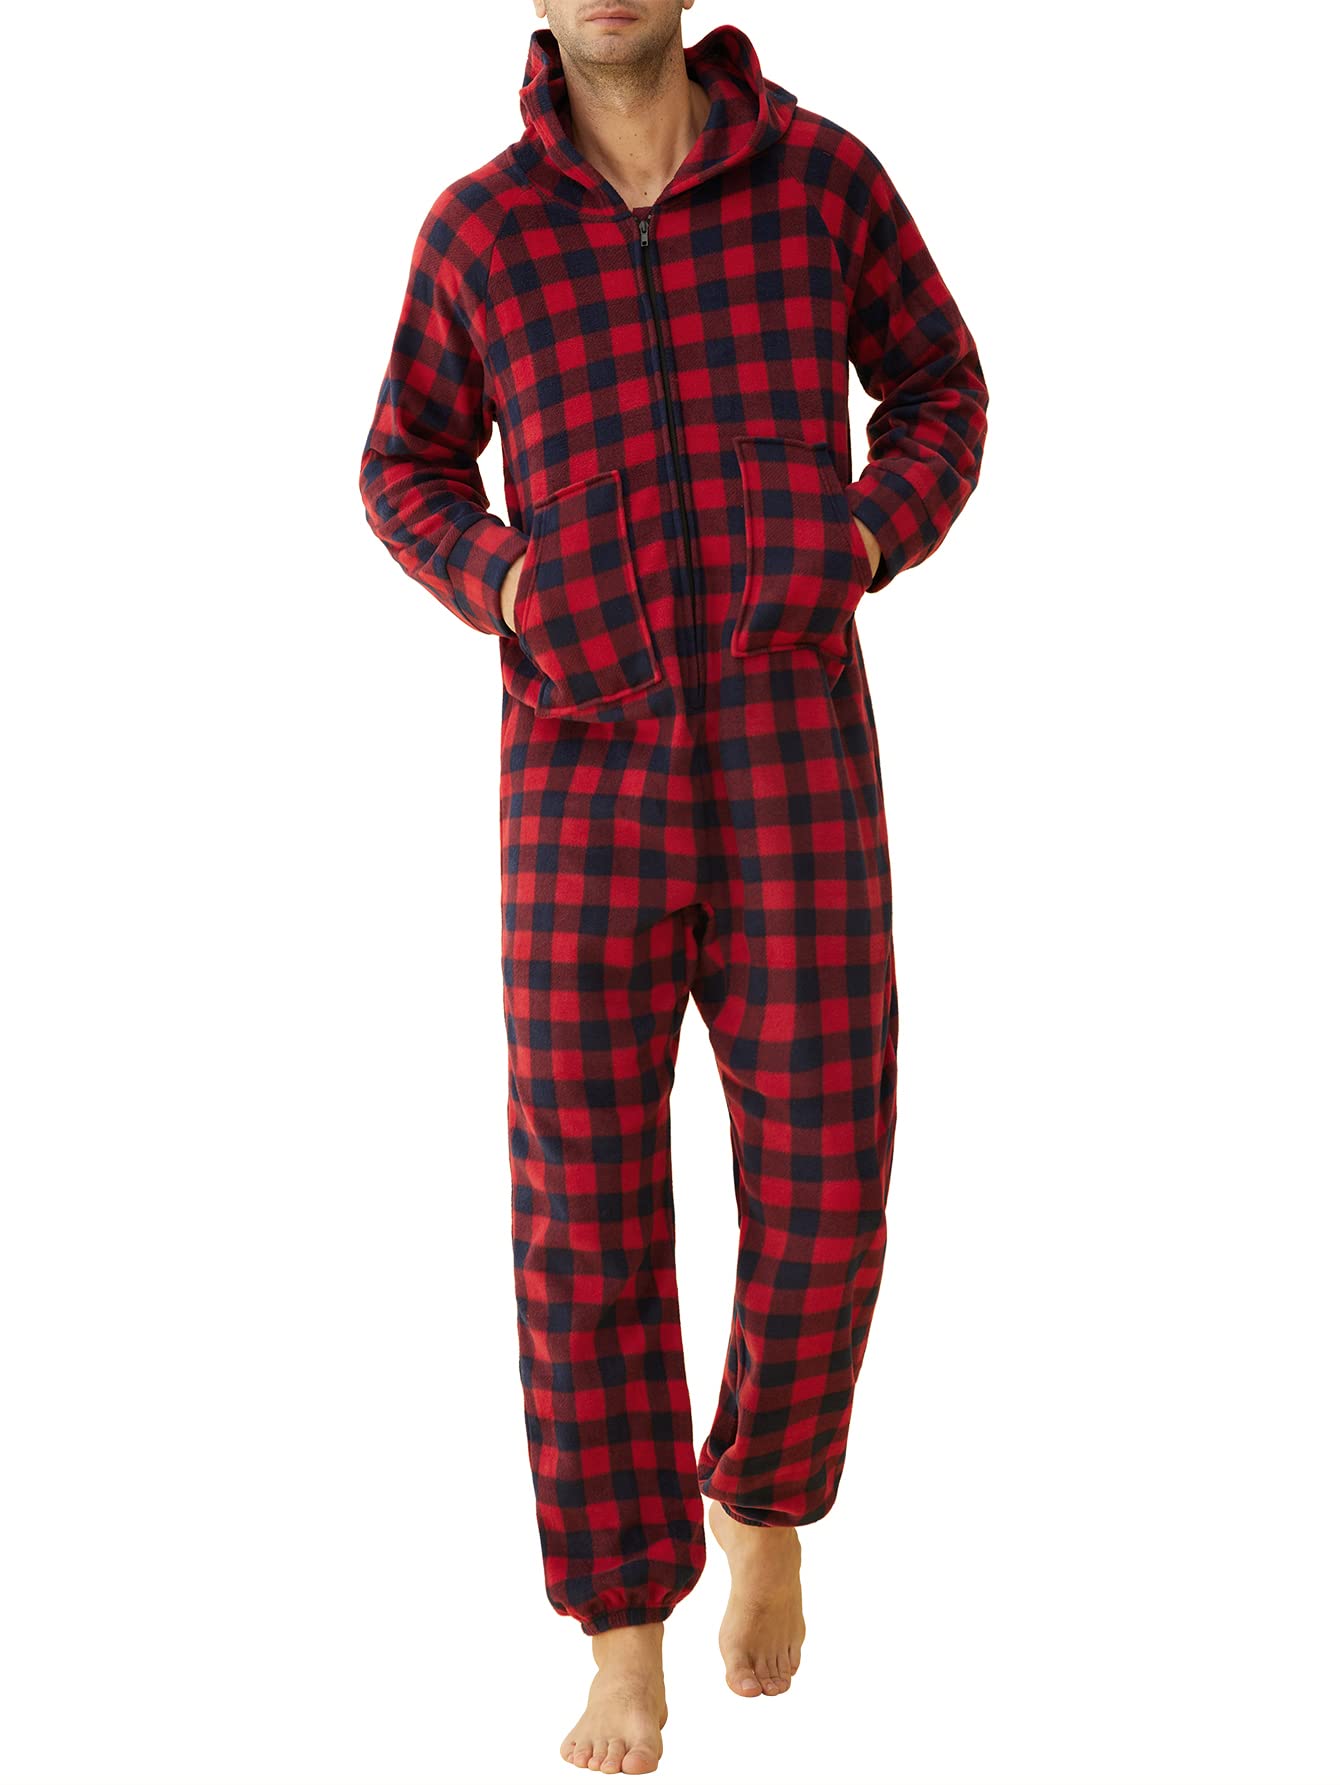 Women Soft Flannel Sleepwear Onesie Pajamas Warm Holiday Hooded